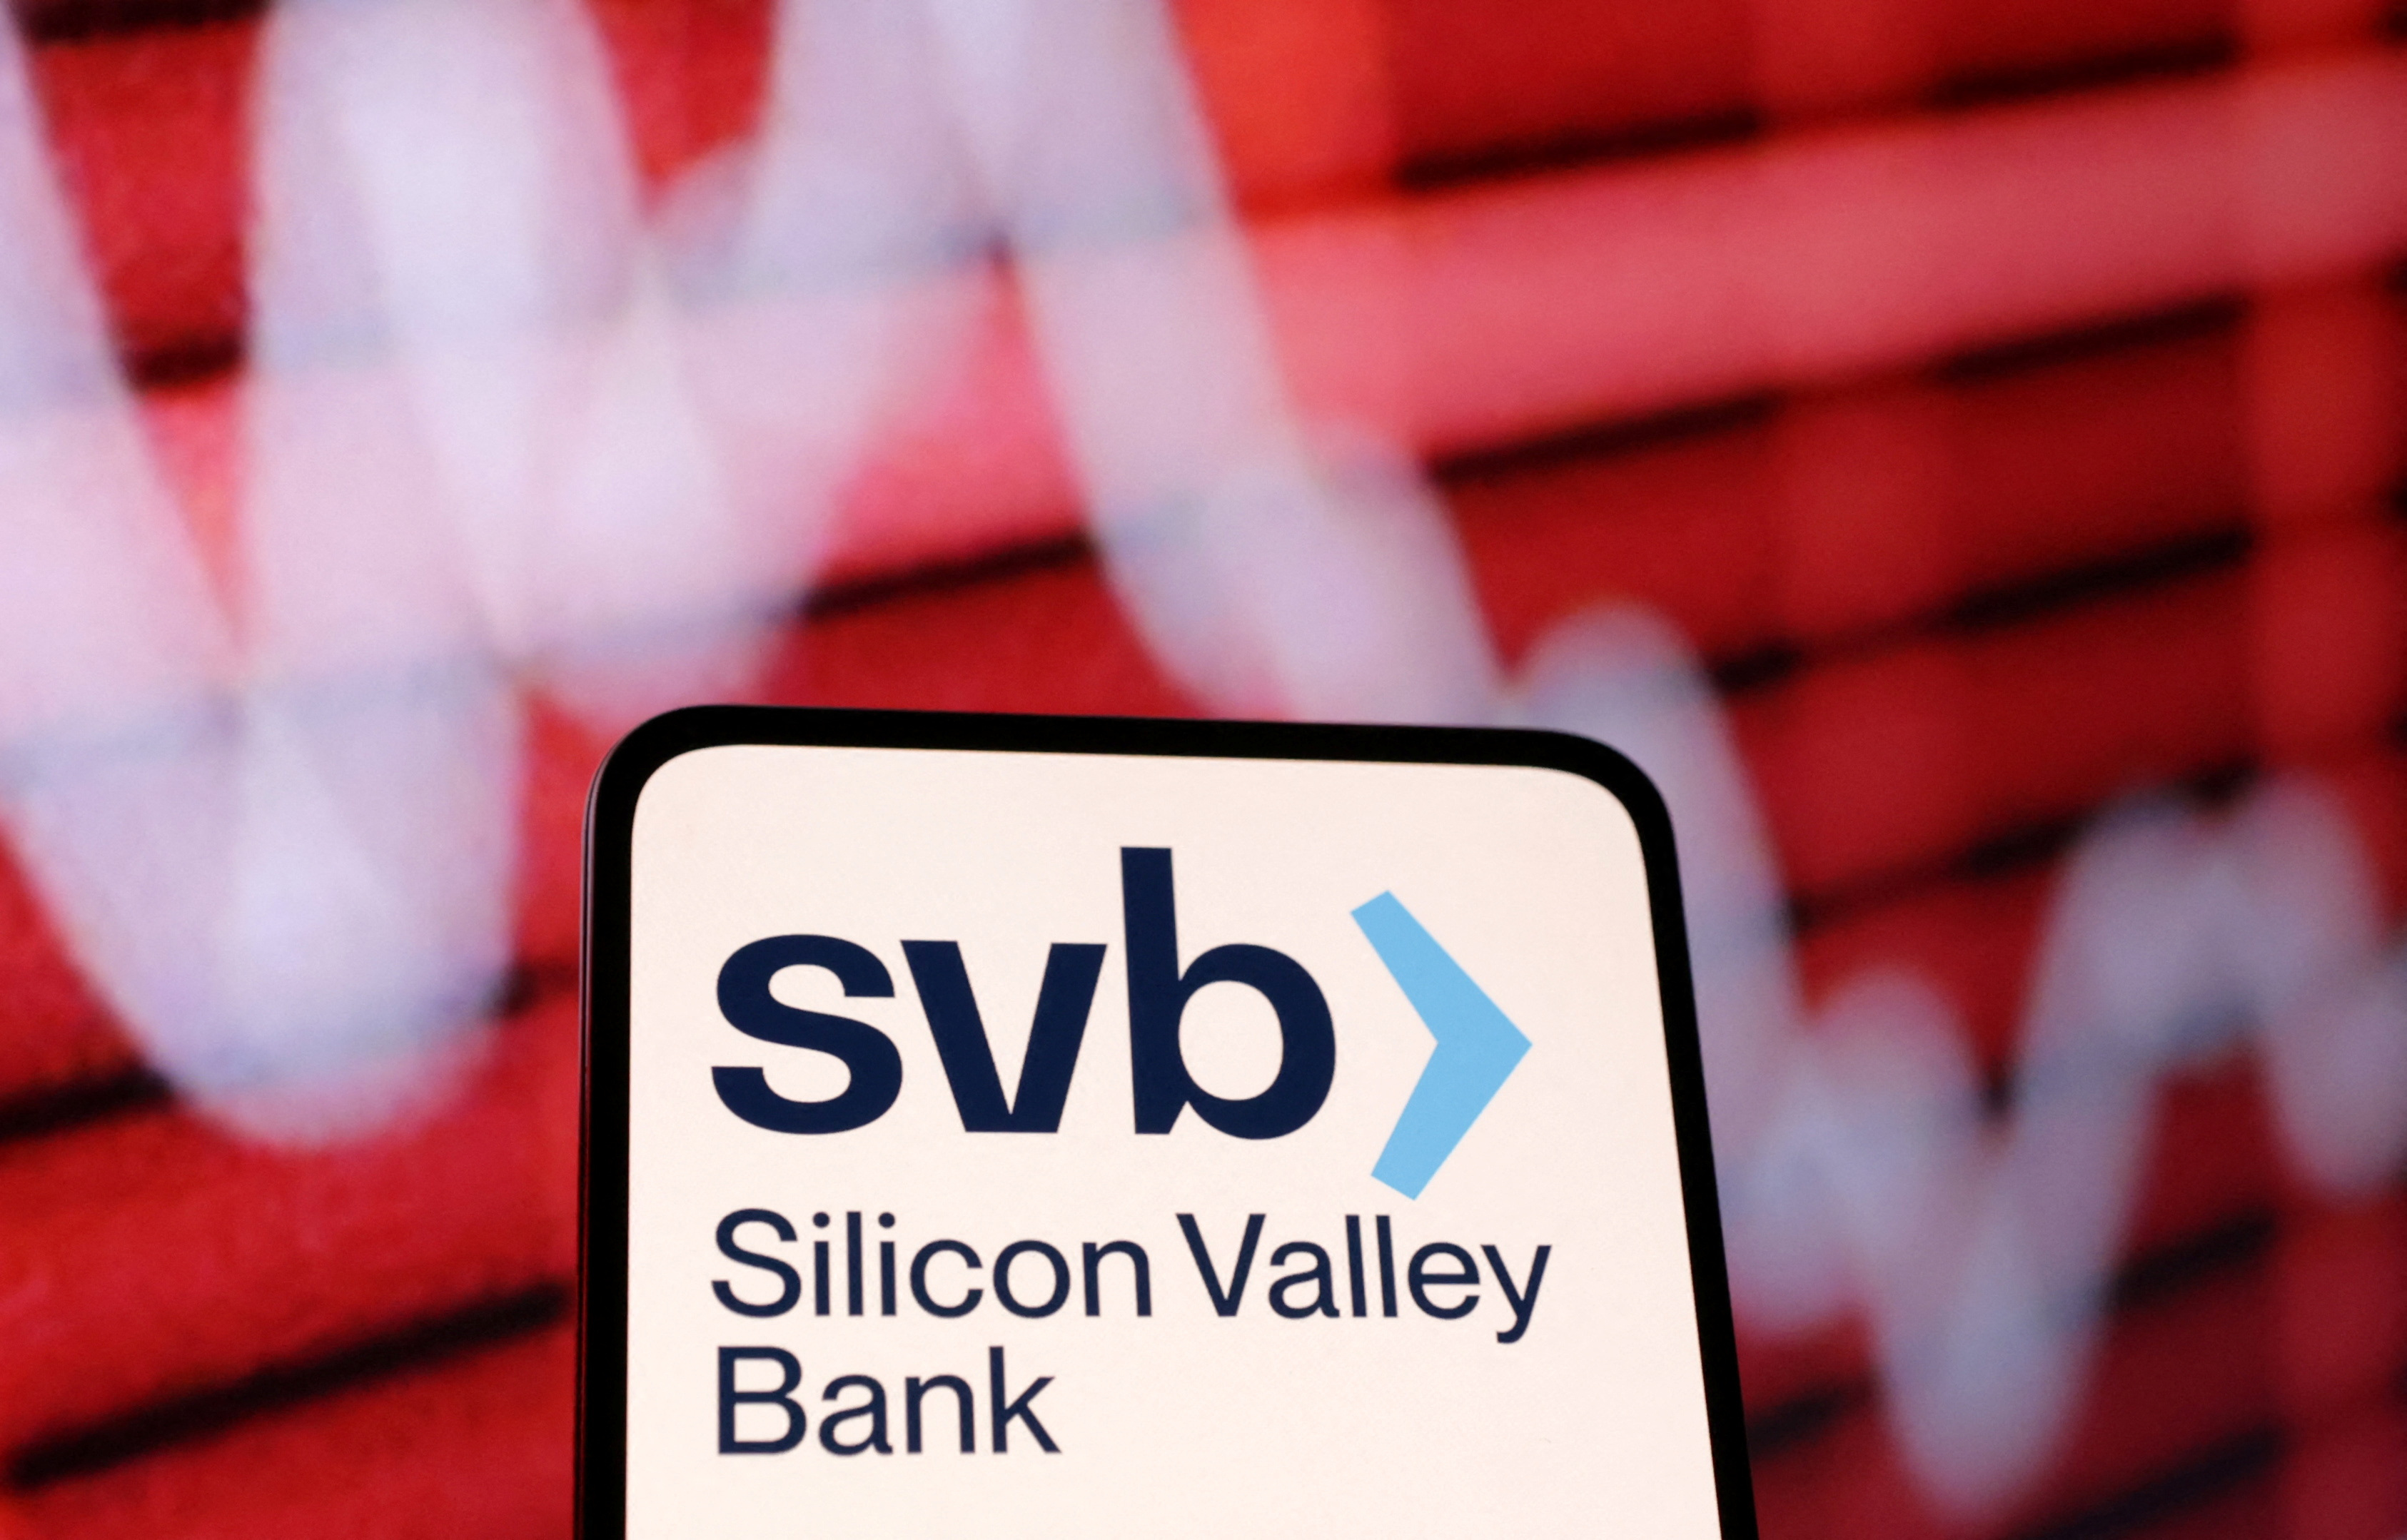 Illustration shows SVB (Silicon Valley Bank) logo